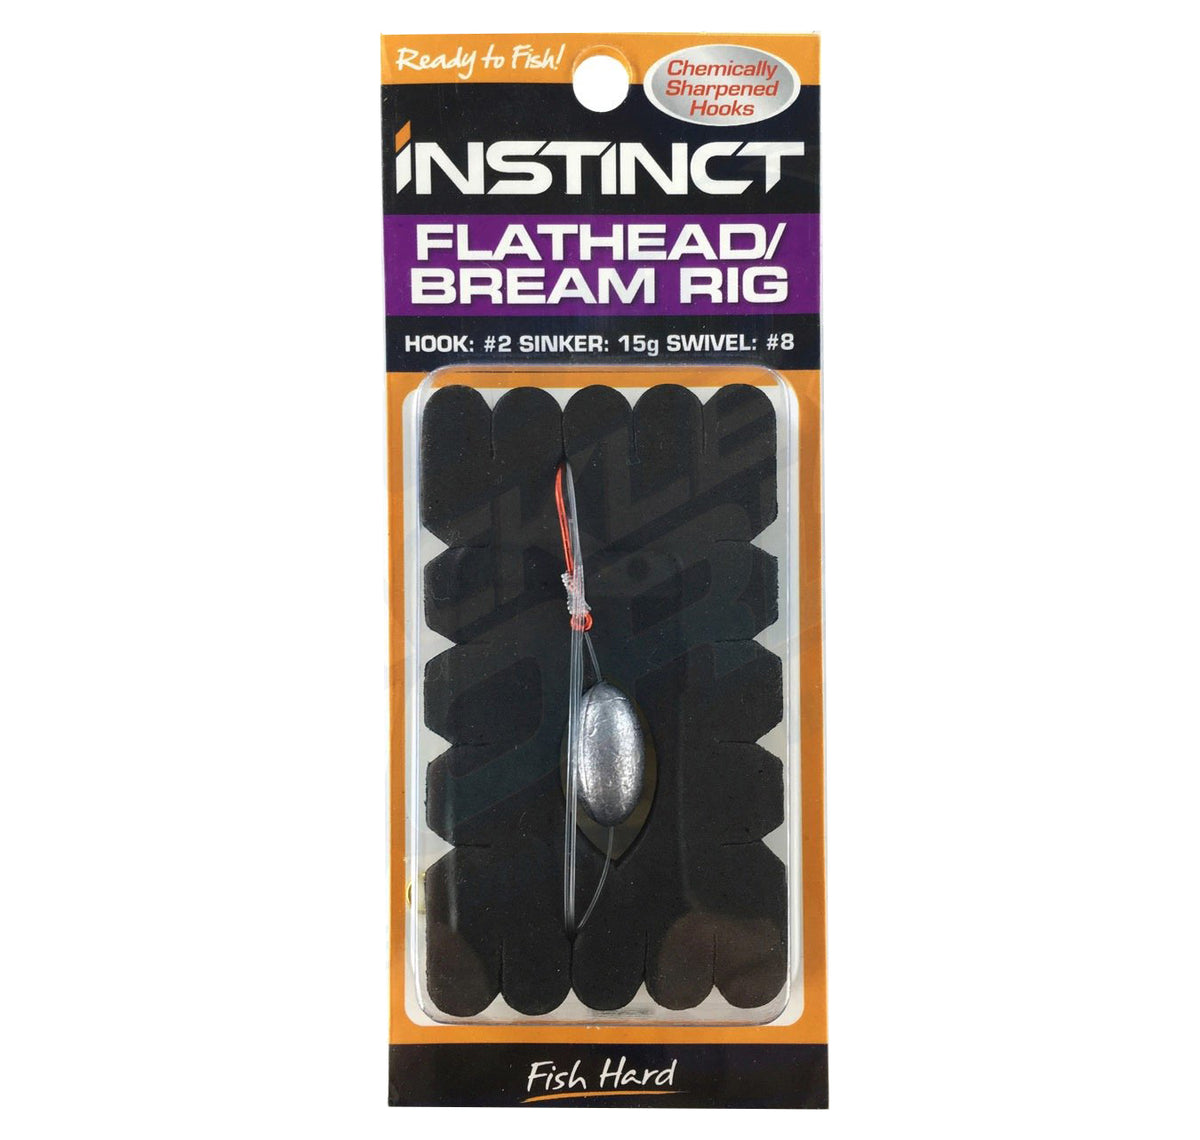 Instinct Flathead/Bream Rig